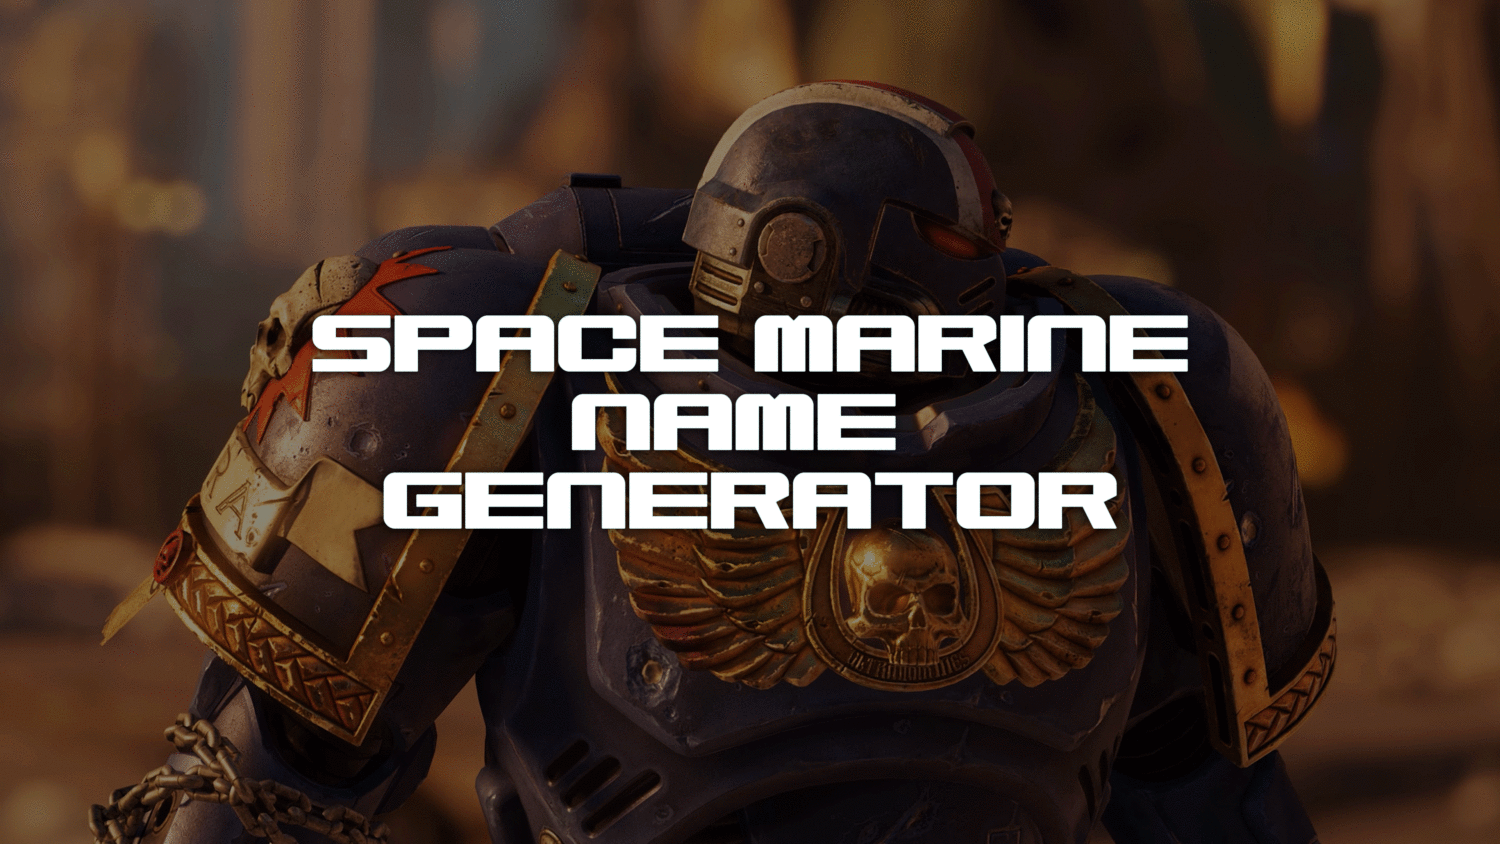 Tranquility mobile amateur Space Marine Name Generator - Random Name Generators